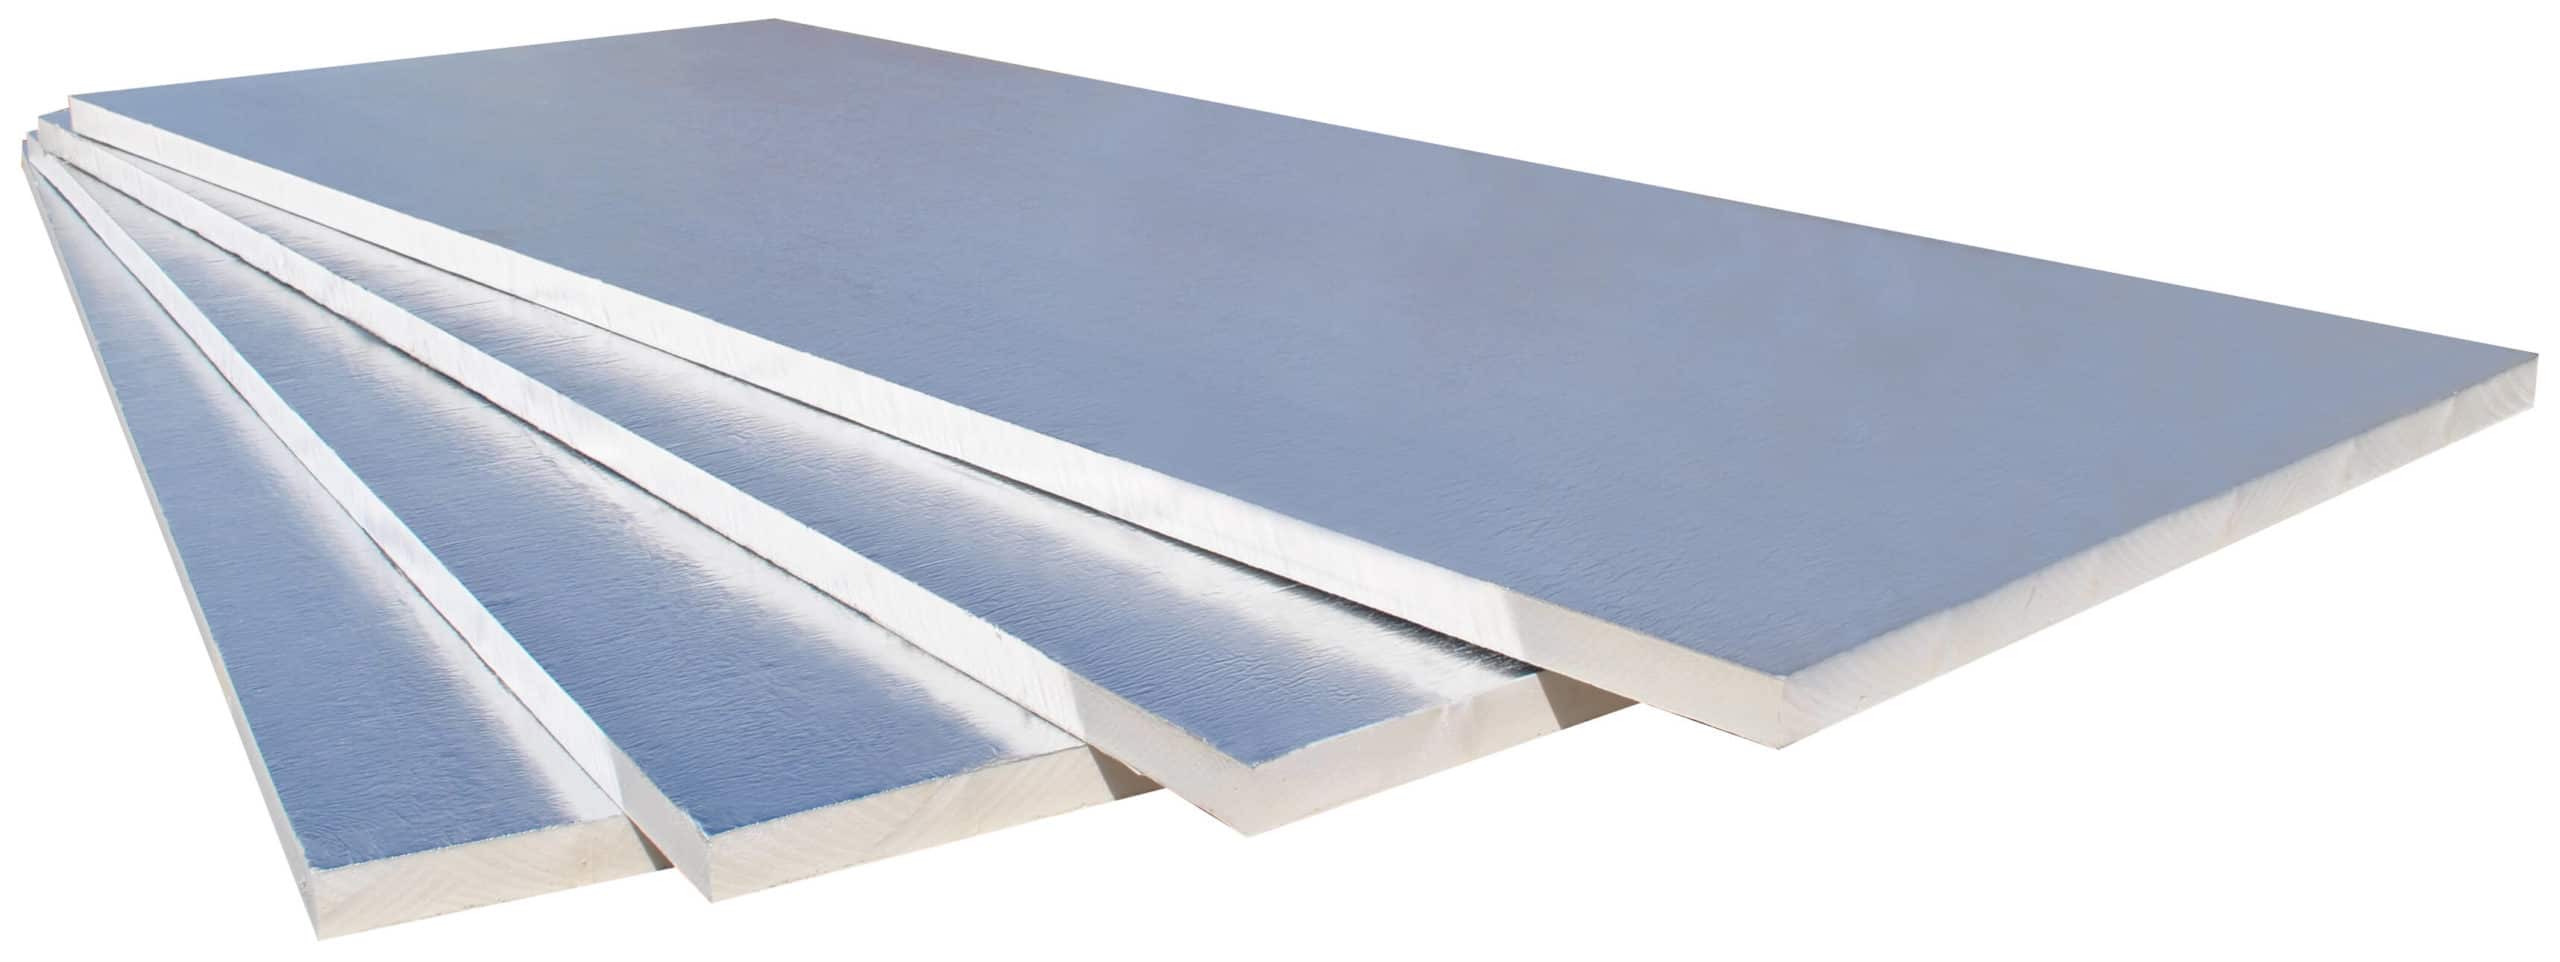 Foam Board Insulation - Metal Building Insulation